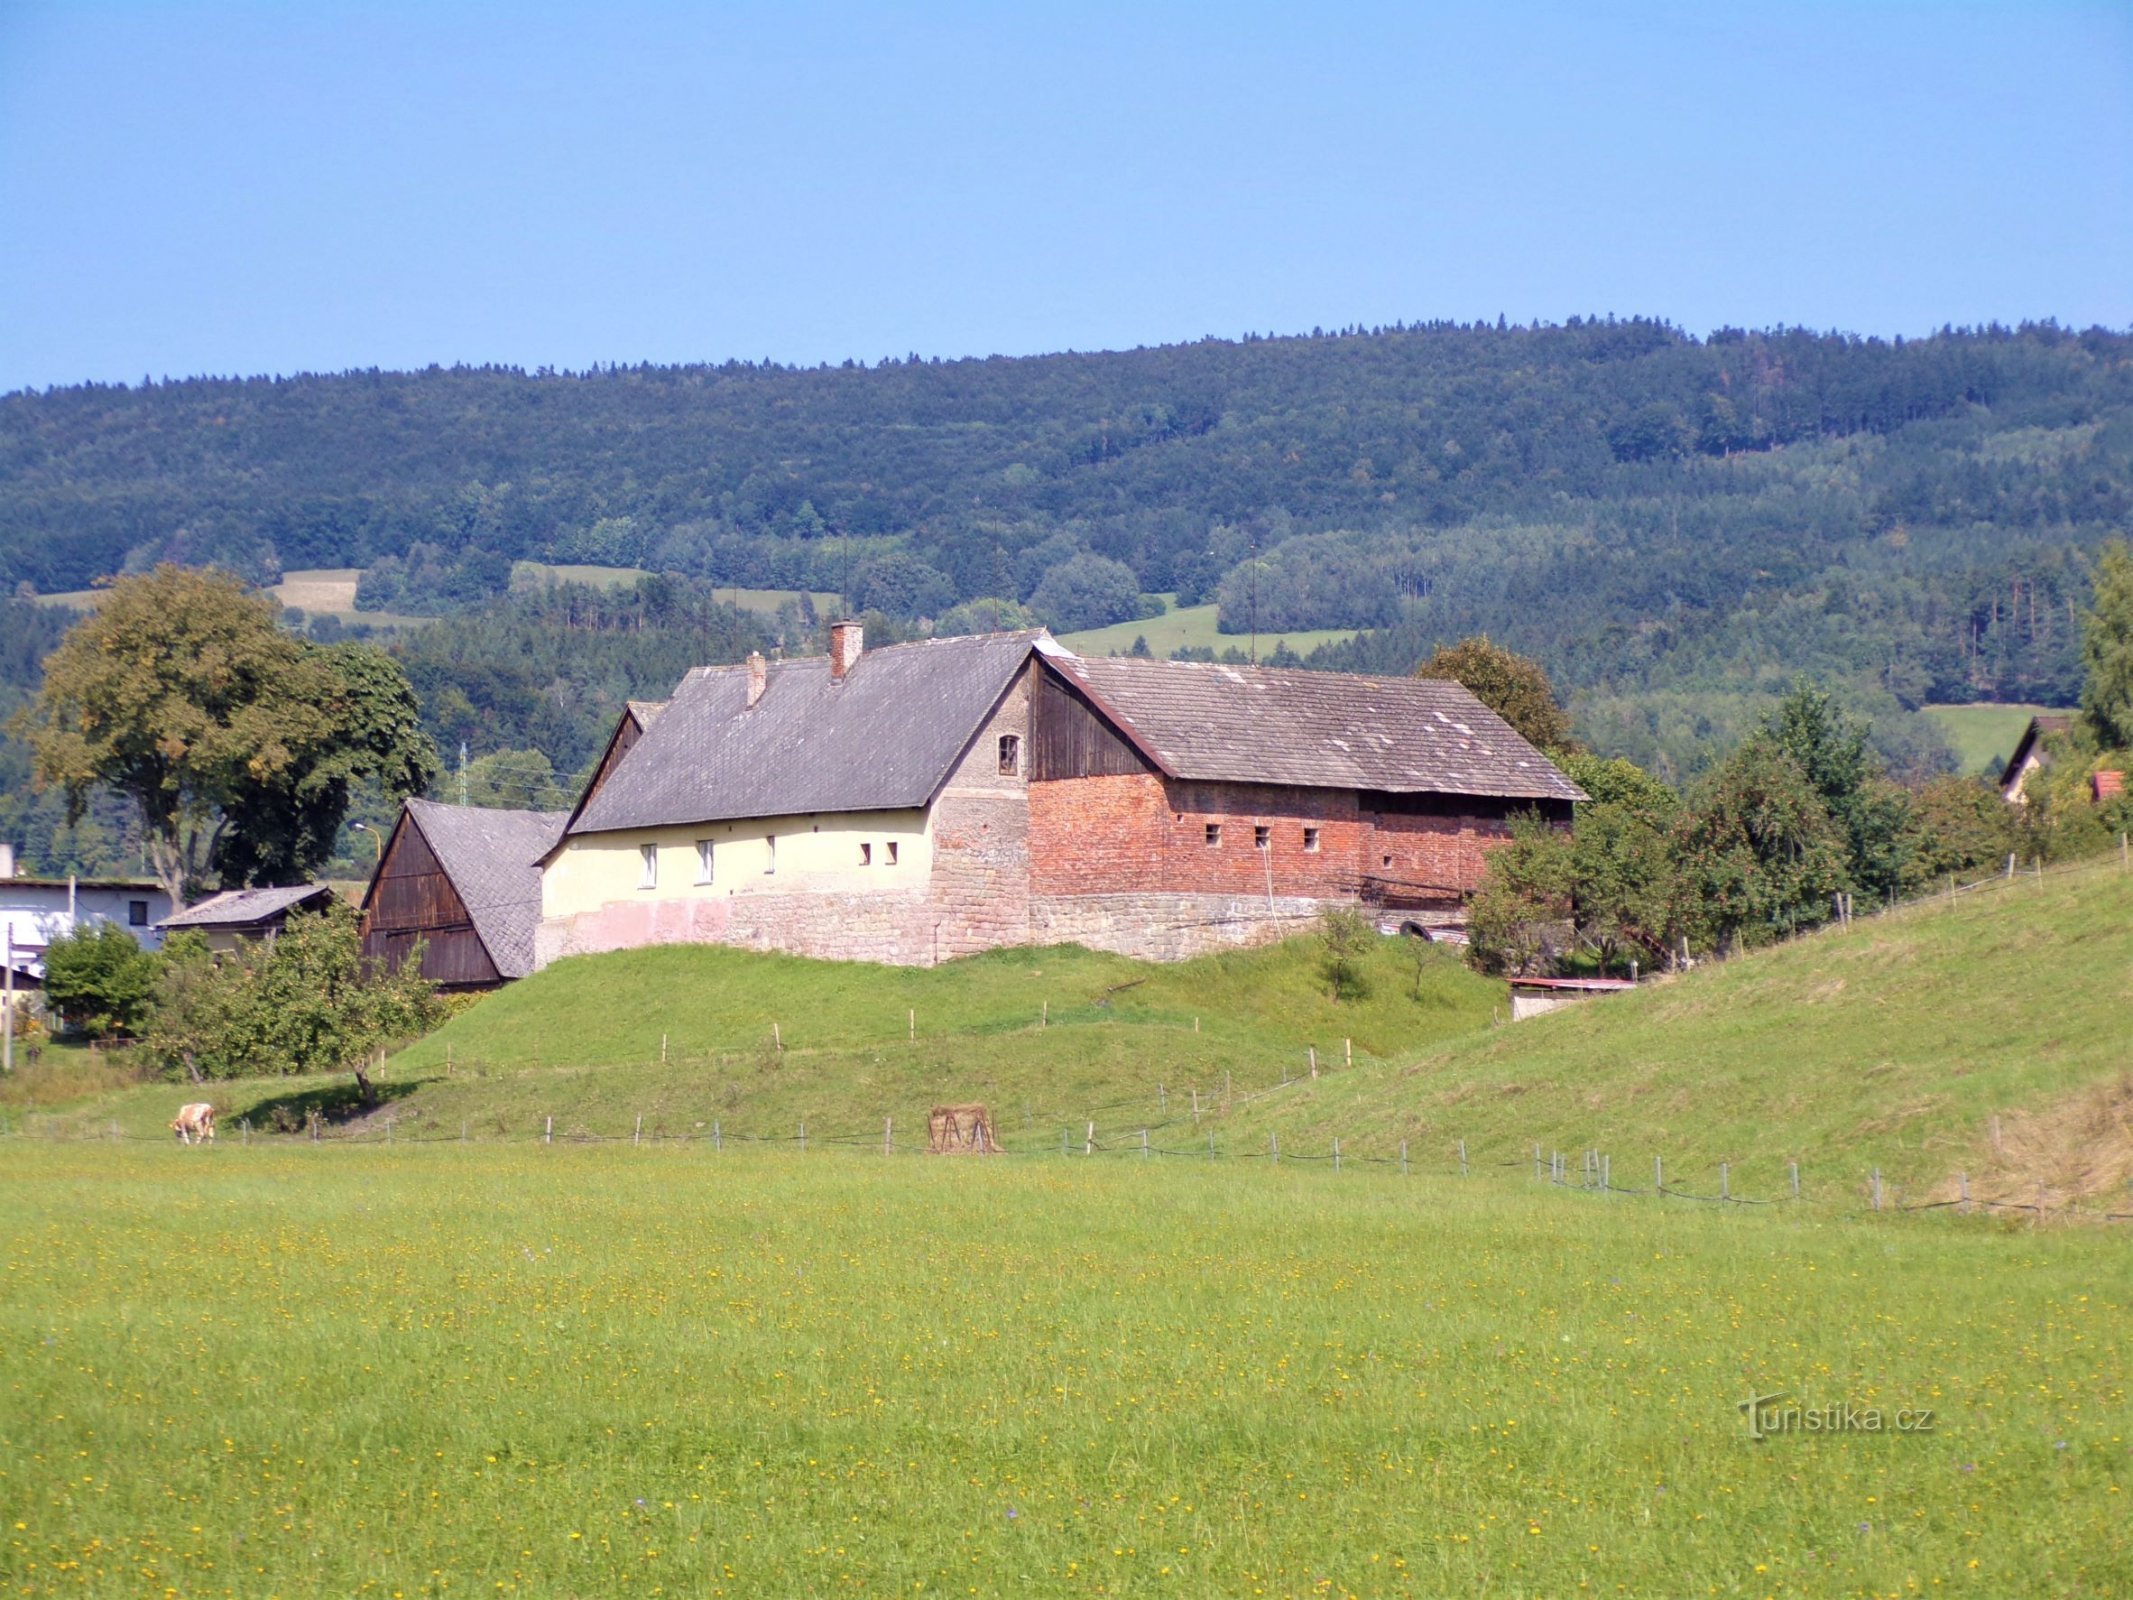 Tenuta n. 242 sul sito di un'antica fortezza (Velké Svatoňovice, 6.9.2021/XNUMX/XNUMX)